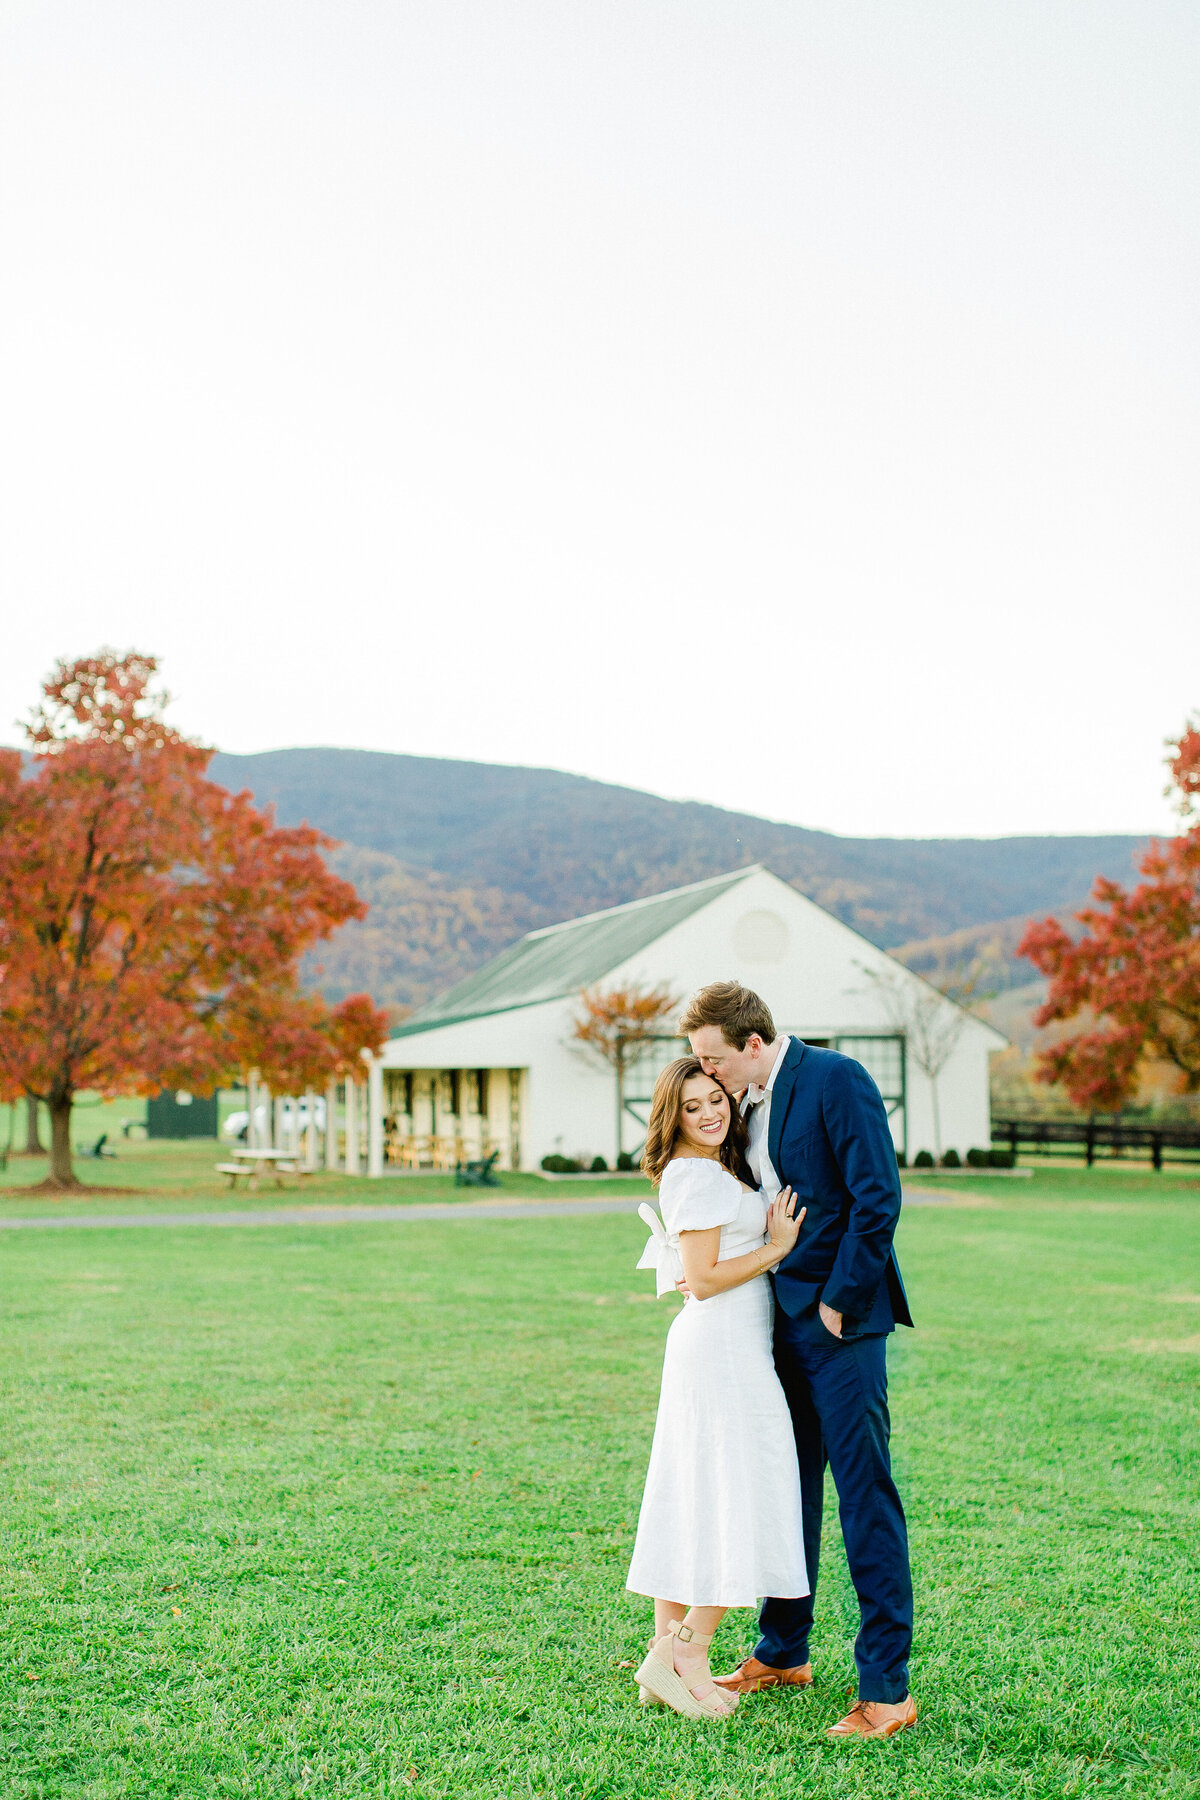 Virginia Wedding Photographer | ©Ailyn La Torre Photography 2020-54102